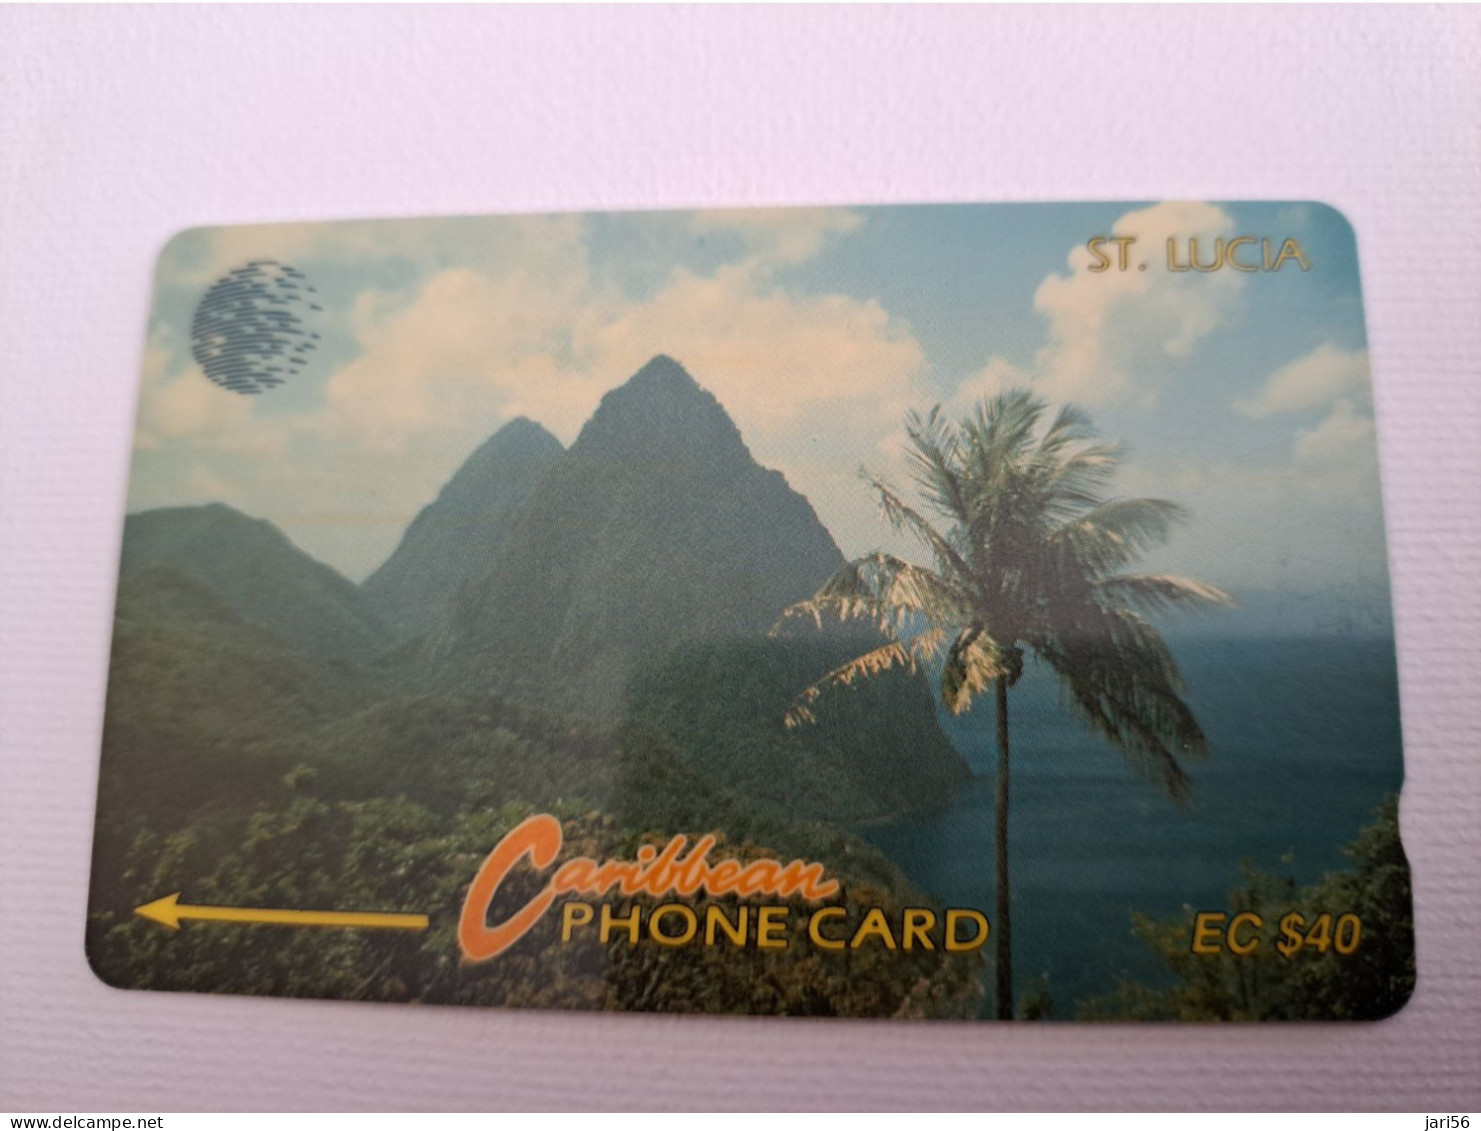 ST LUCIA    $ 40  CABLE & WIRELESS  STL-12C  12CSLC      Fine Used Card ** 13523** - Saint Lucia